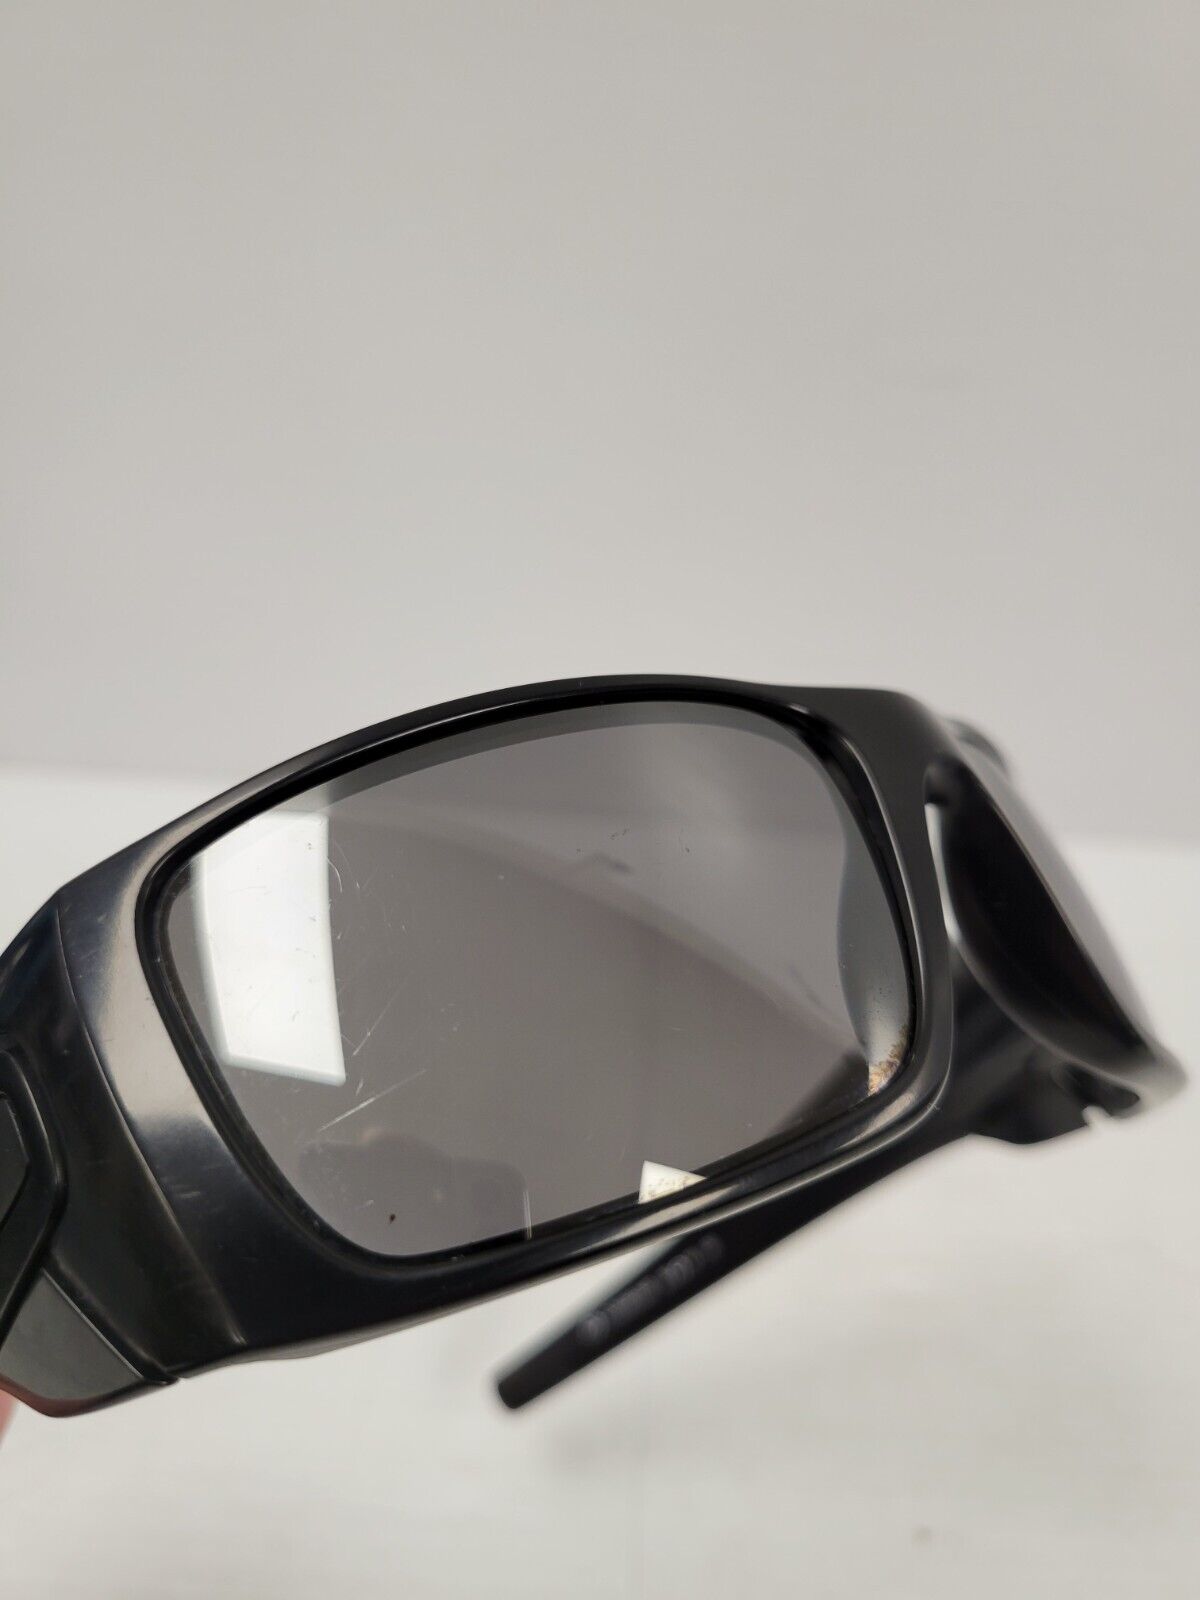 (50190-1) Oakley 6019 Sunglasses